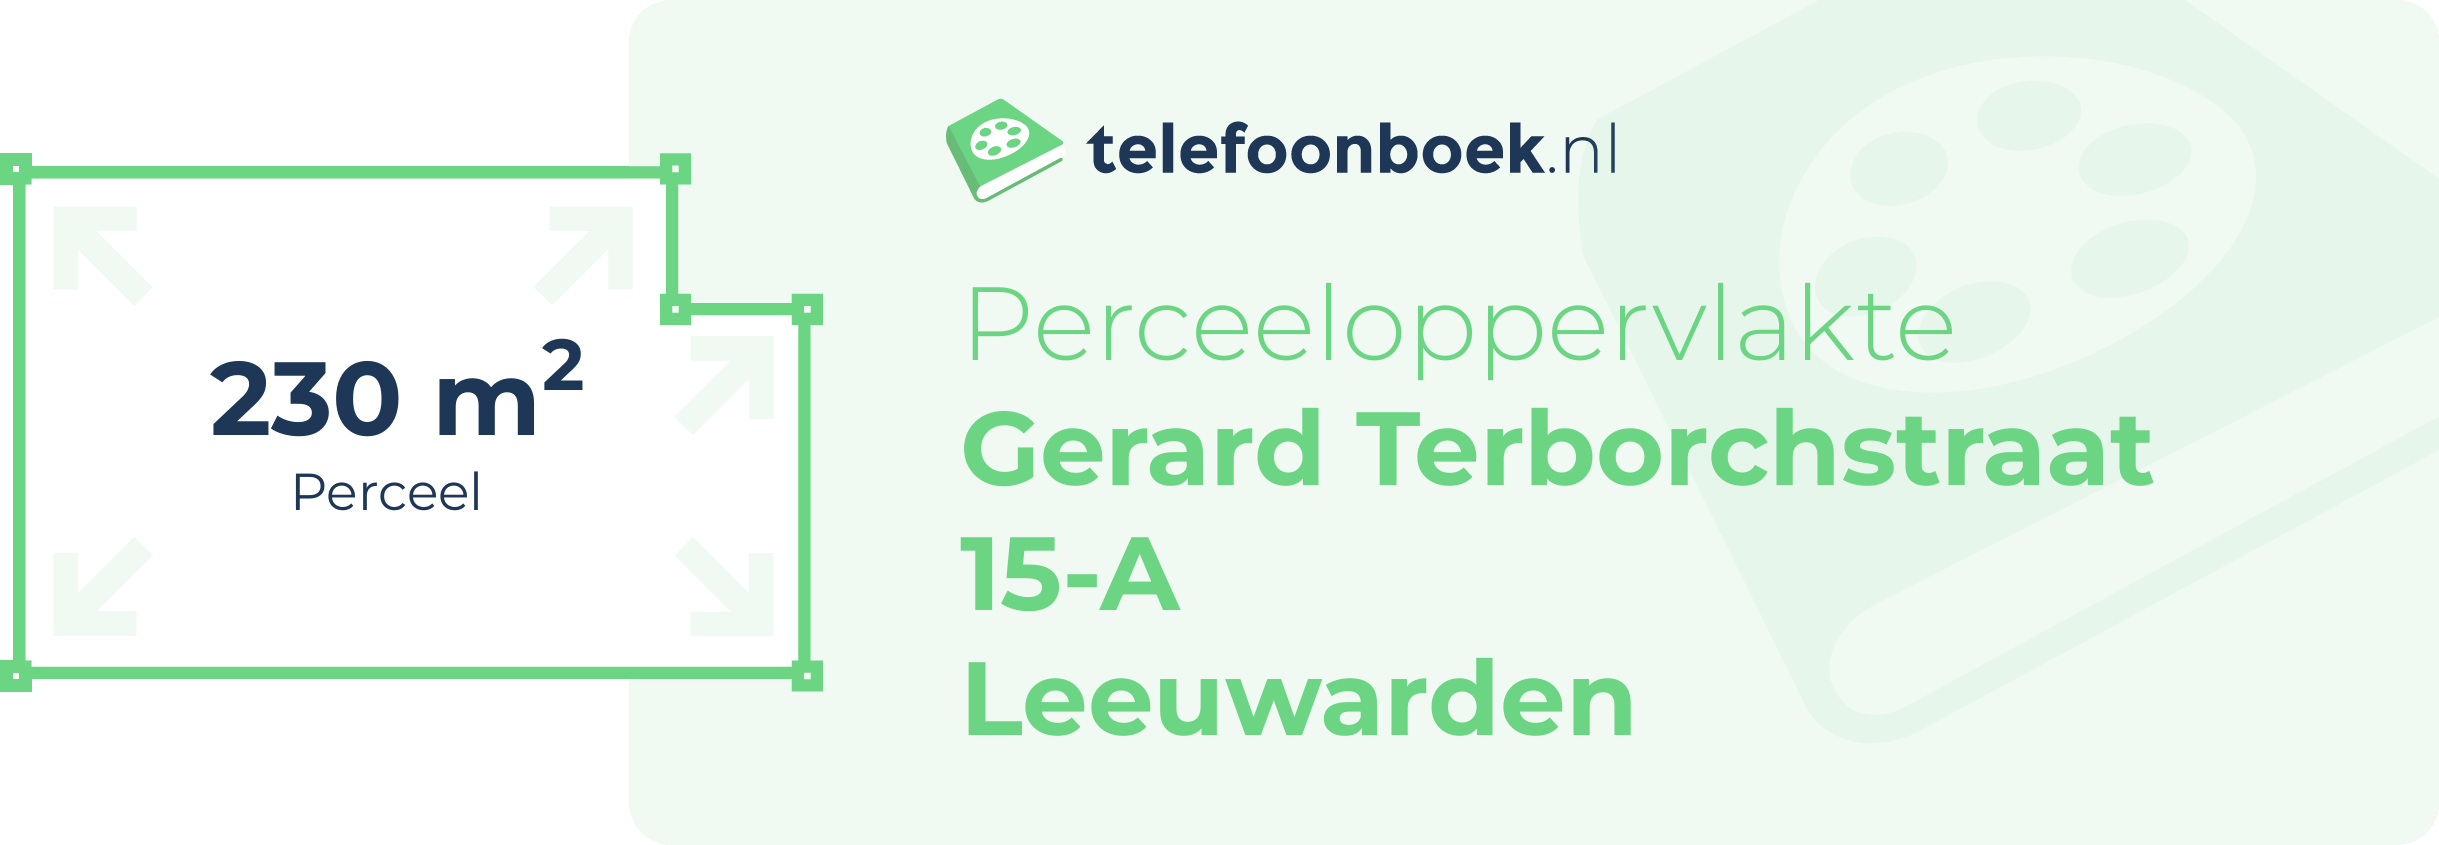 Perceeloppervlakte Gerard Terborchstraat 15-A Leeuwarden